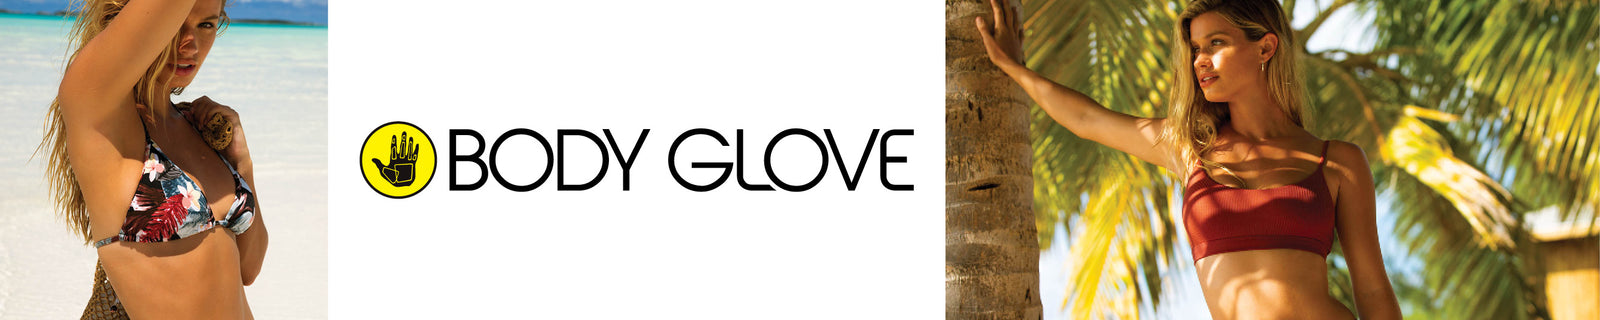 Body Glove banner